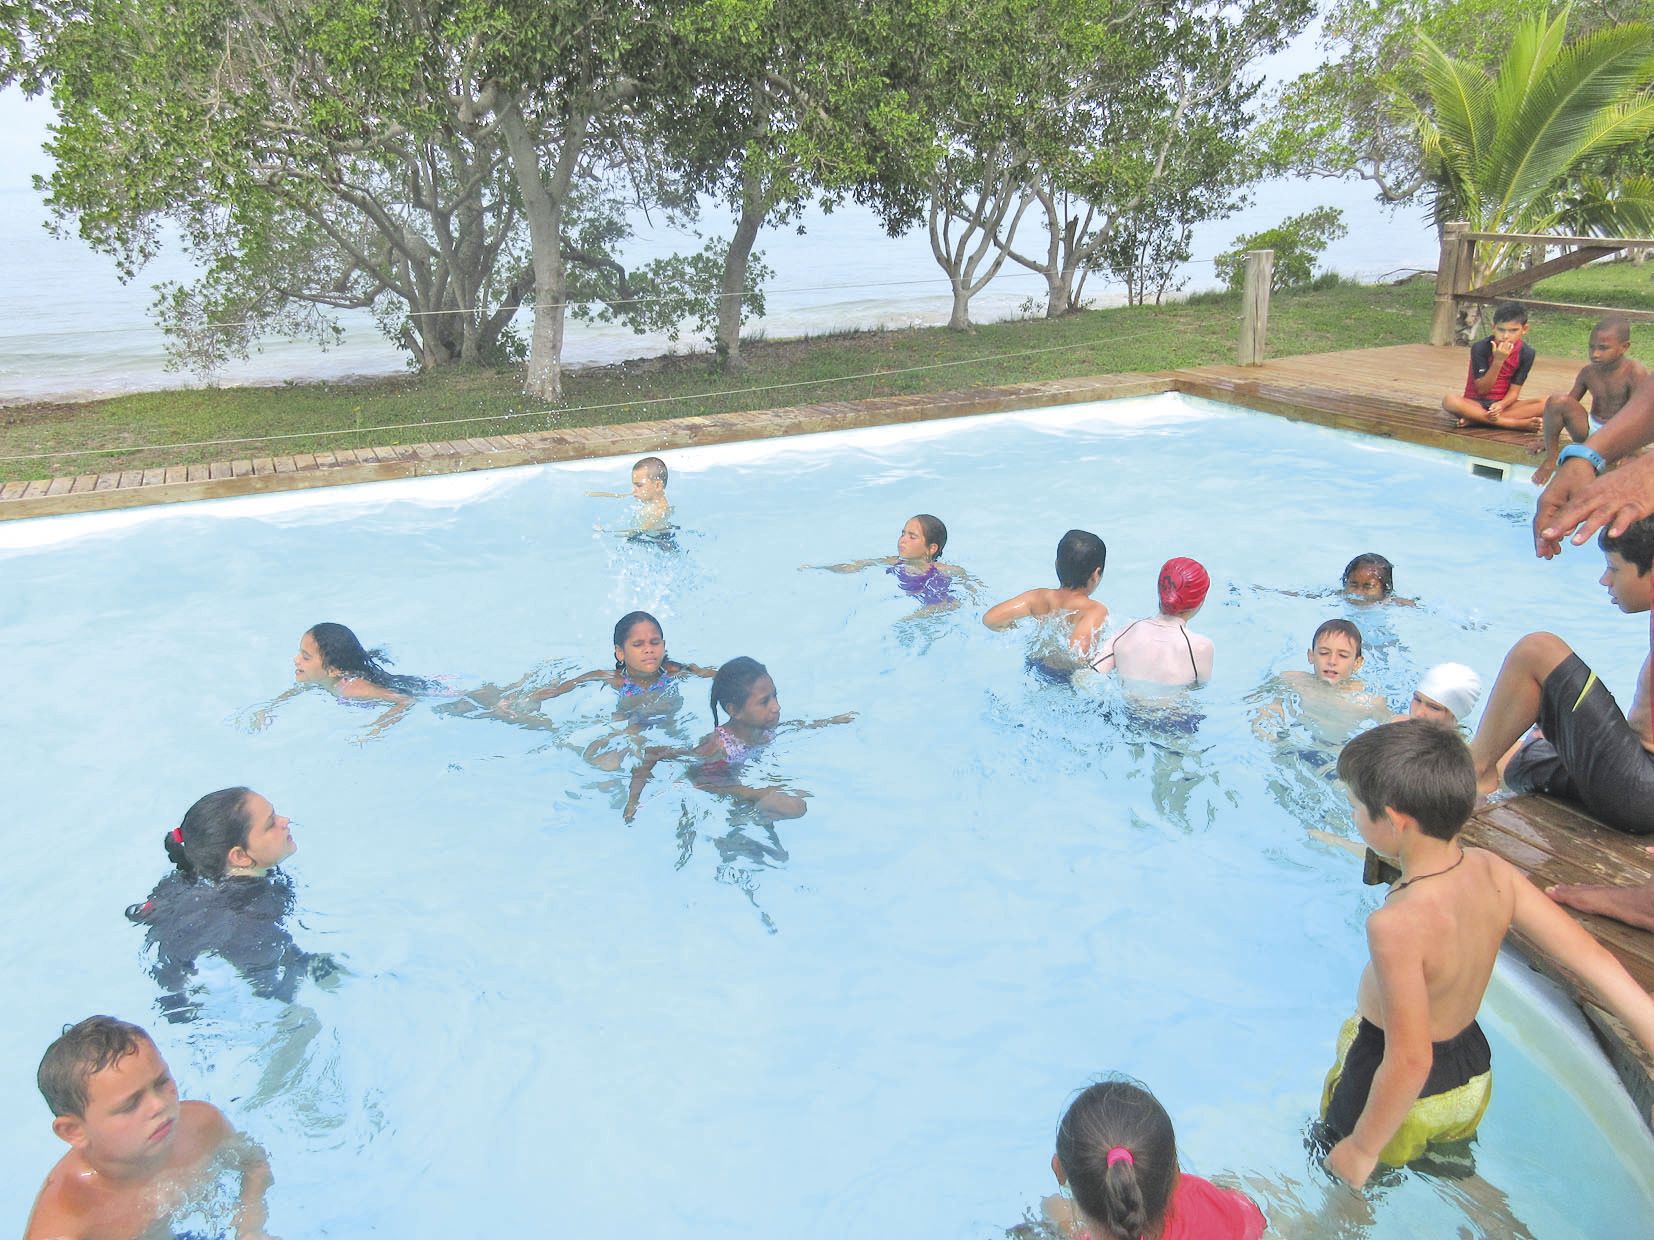 Les jeunes vacanciers ont pu profiter des installations de la piscine du Caledonian Wake Park de Ouano.